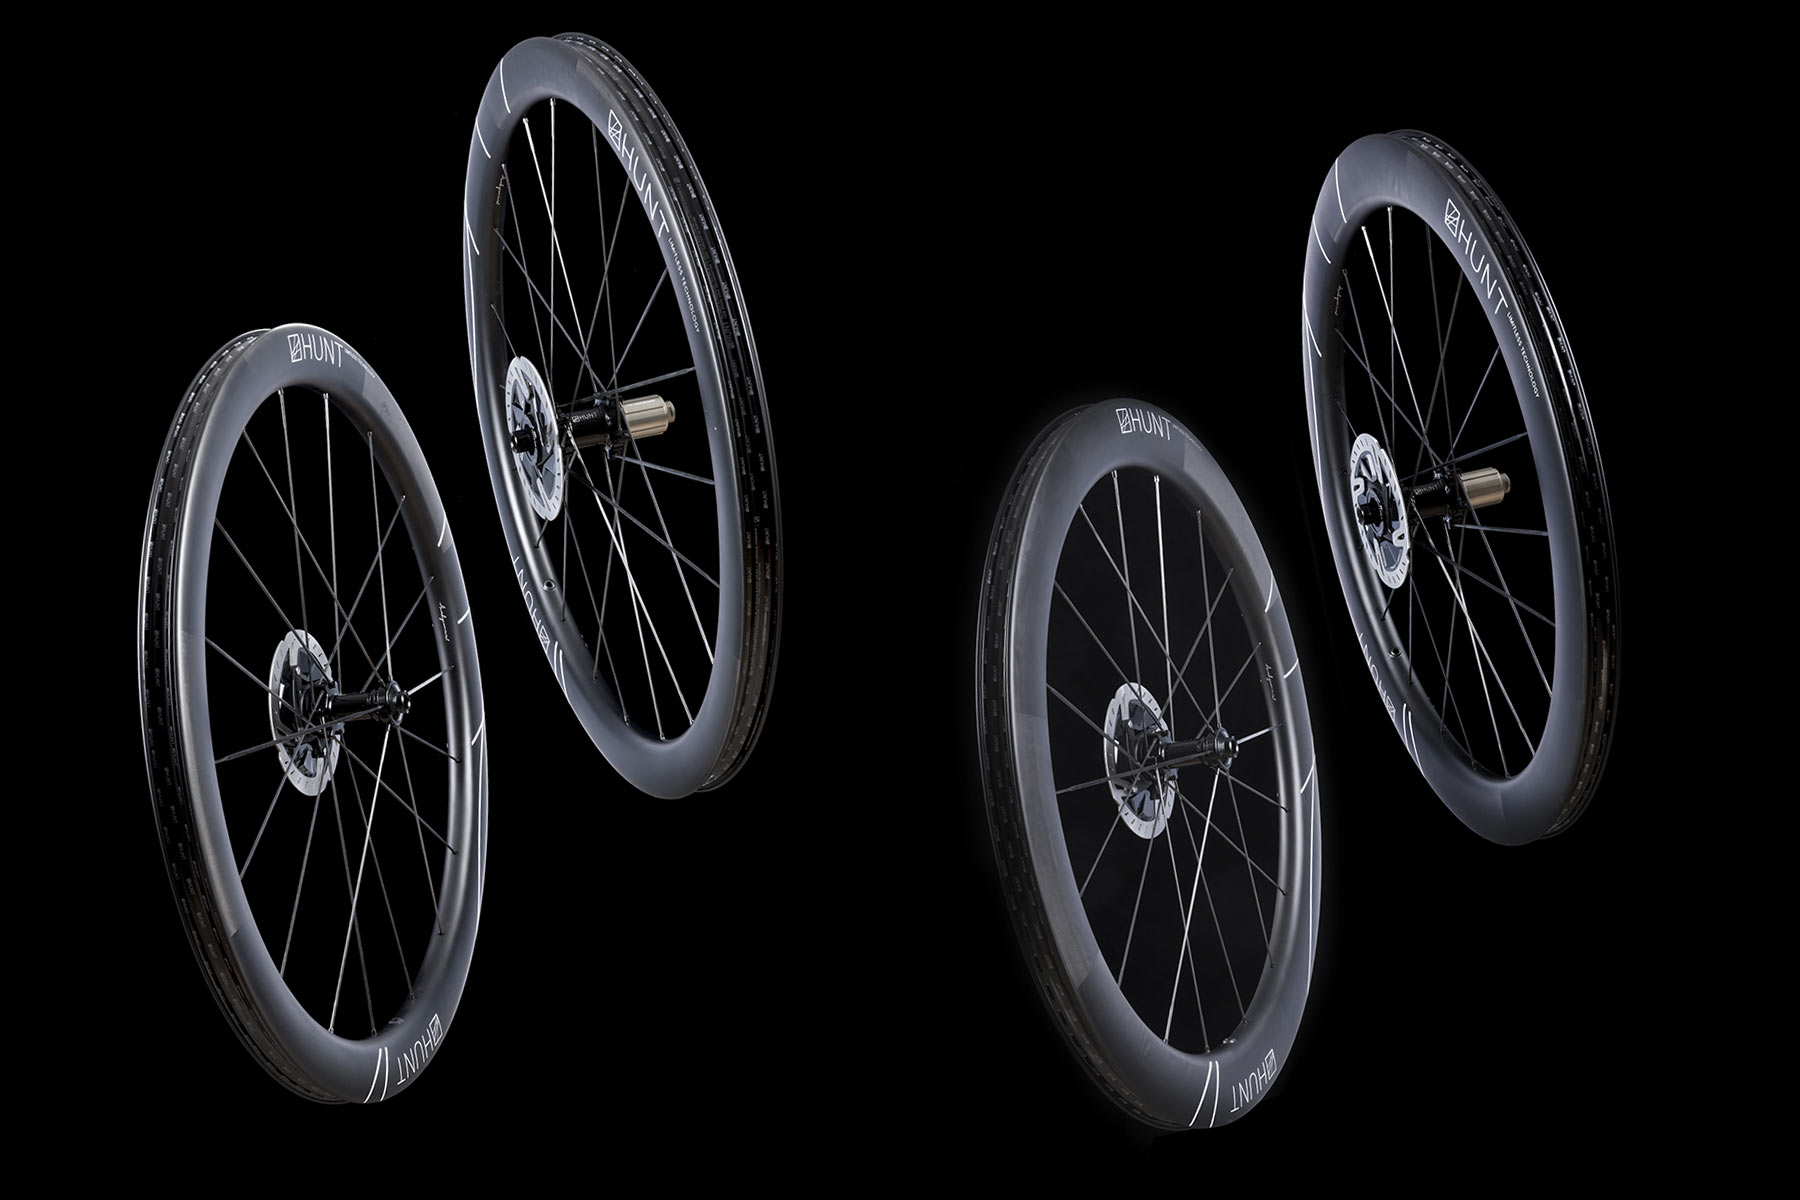 Hunt 48 60 Limitless Aerodynamicist UD Carbon Spoke road bike wheelset options